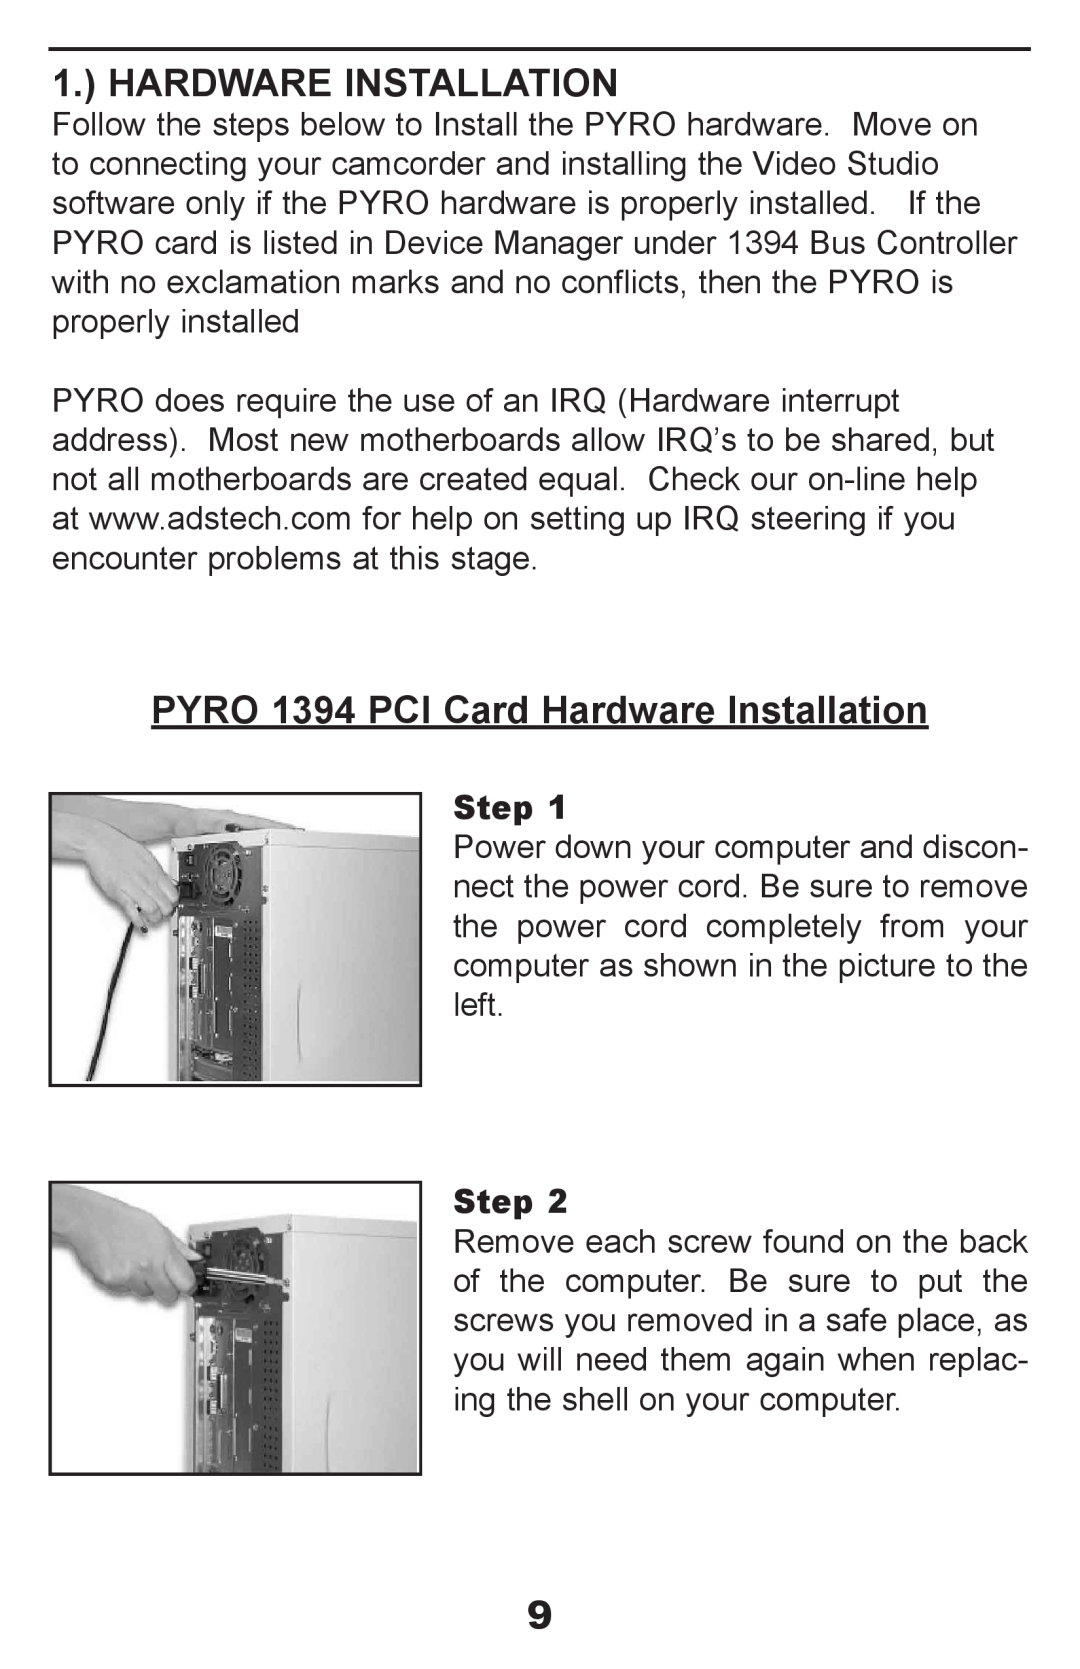 ADS Technologies API-408 manual PYRO 1394 PCI Card Hardware Installation, Step 